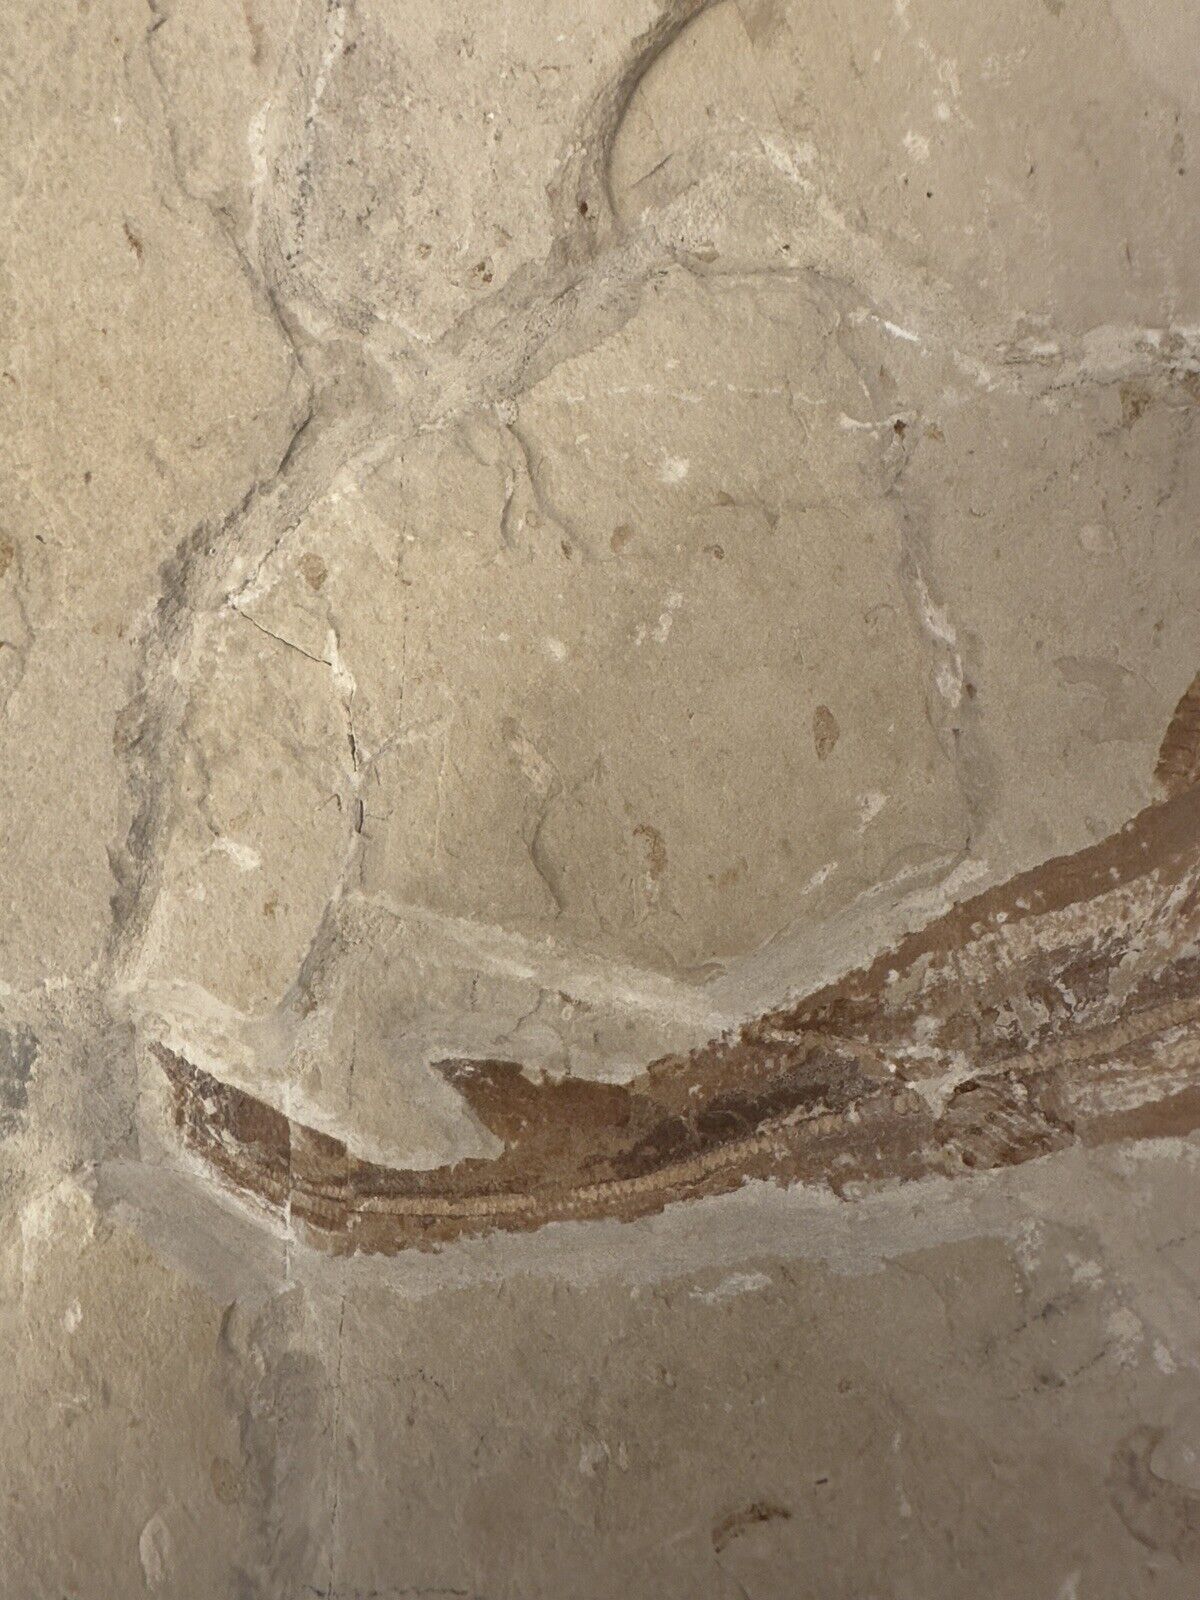 Lebanon Fossil, Rhinobatos Maronita From Haqil, Cretaceous 100 Million Years. Без бренда - фотография #5